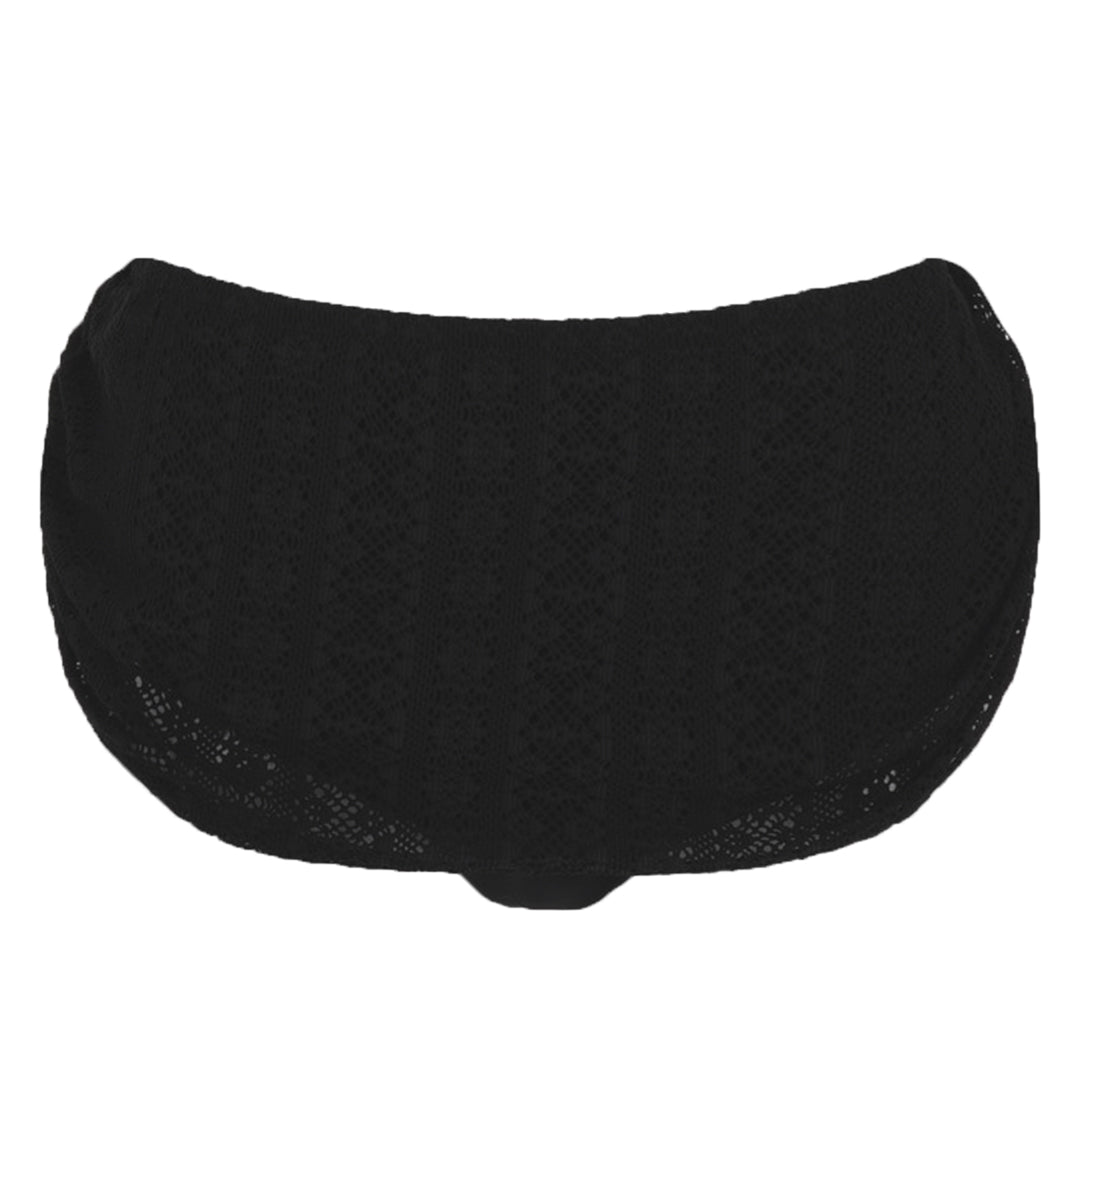 Elomi Kissimmee Adjustable Swim Brief (ES7053),22,Black - Black,22